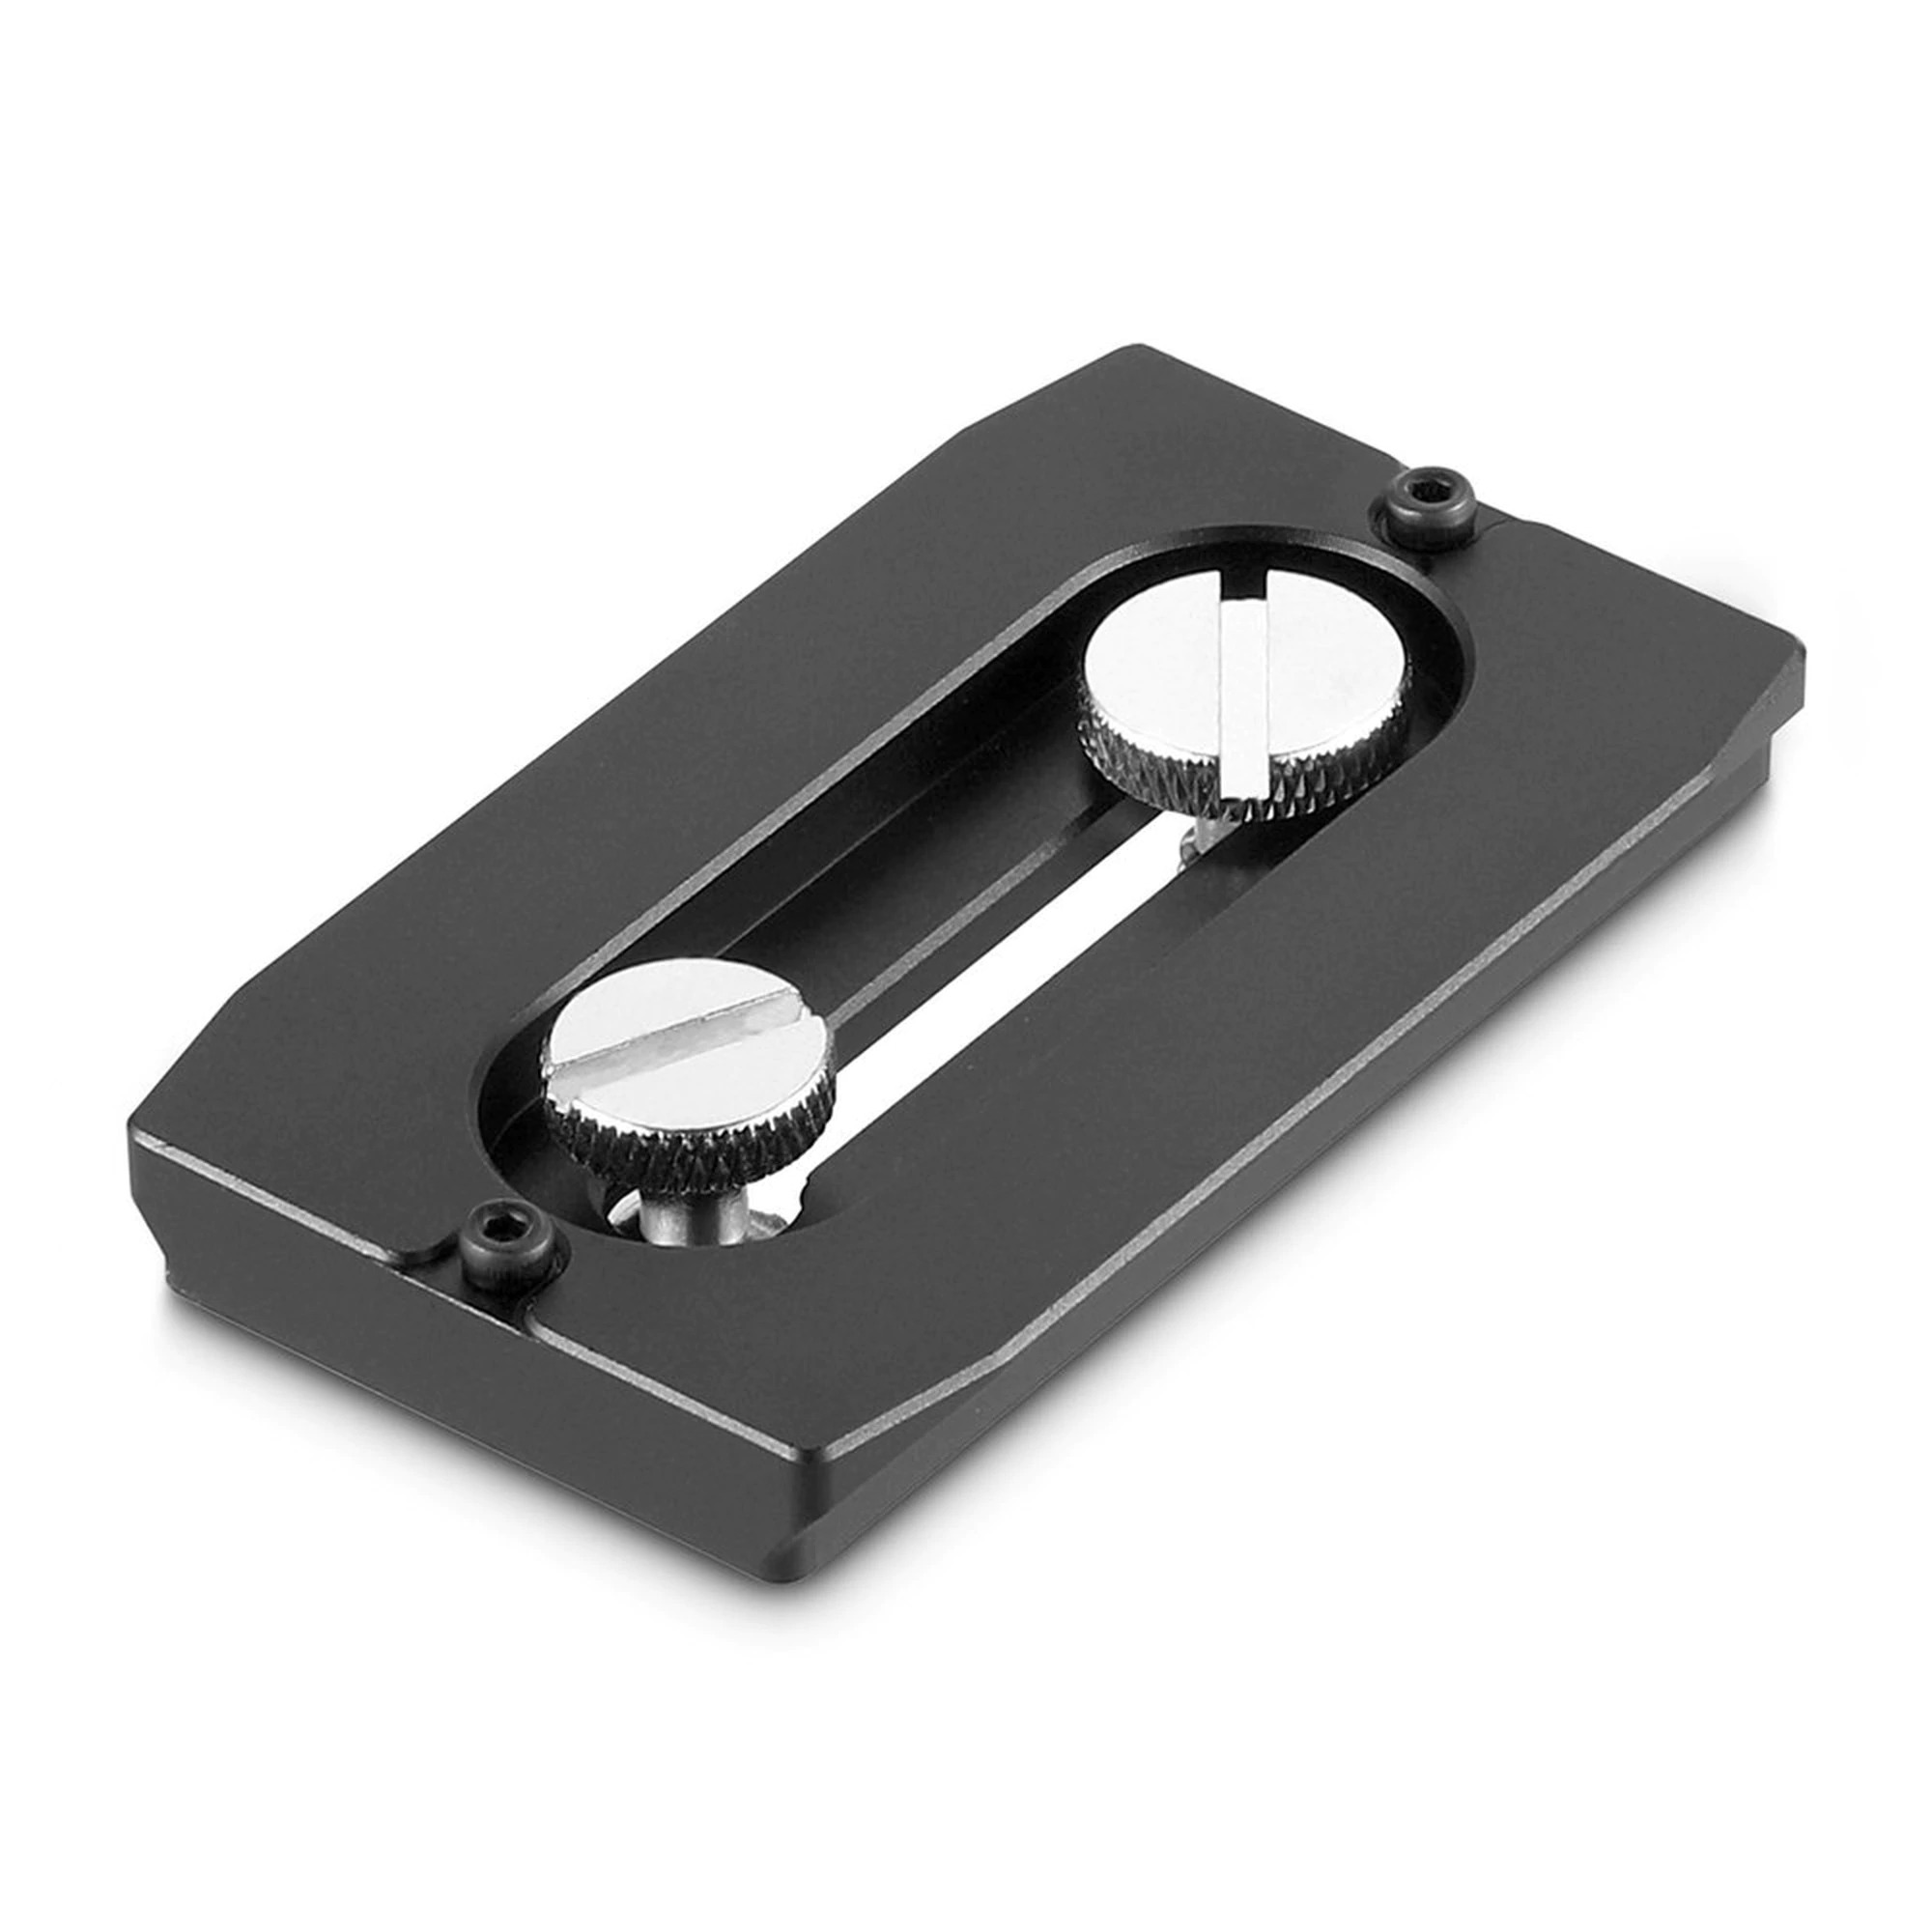 SmallRig Quick Release Plate ( Arca-type Compatible) 2146 เพลทติดกล้องแบบ Arca สำหรับใช้ร่วมกับ SmallRig Baseplate หรือติดเข้ากับหัวบอล Arca ได้ทันที ราคา 850 บาท